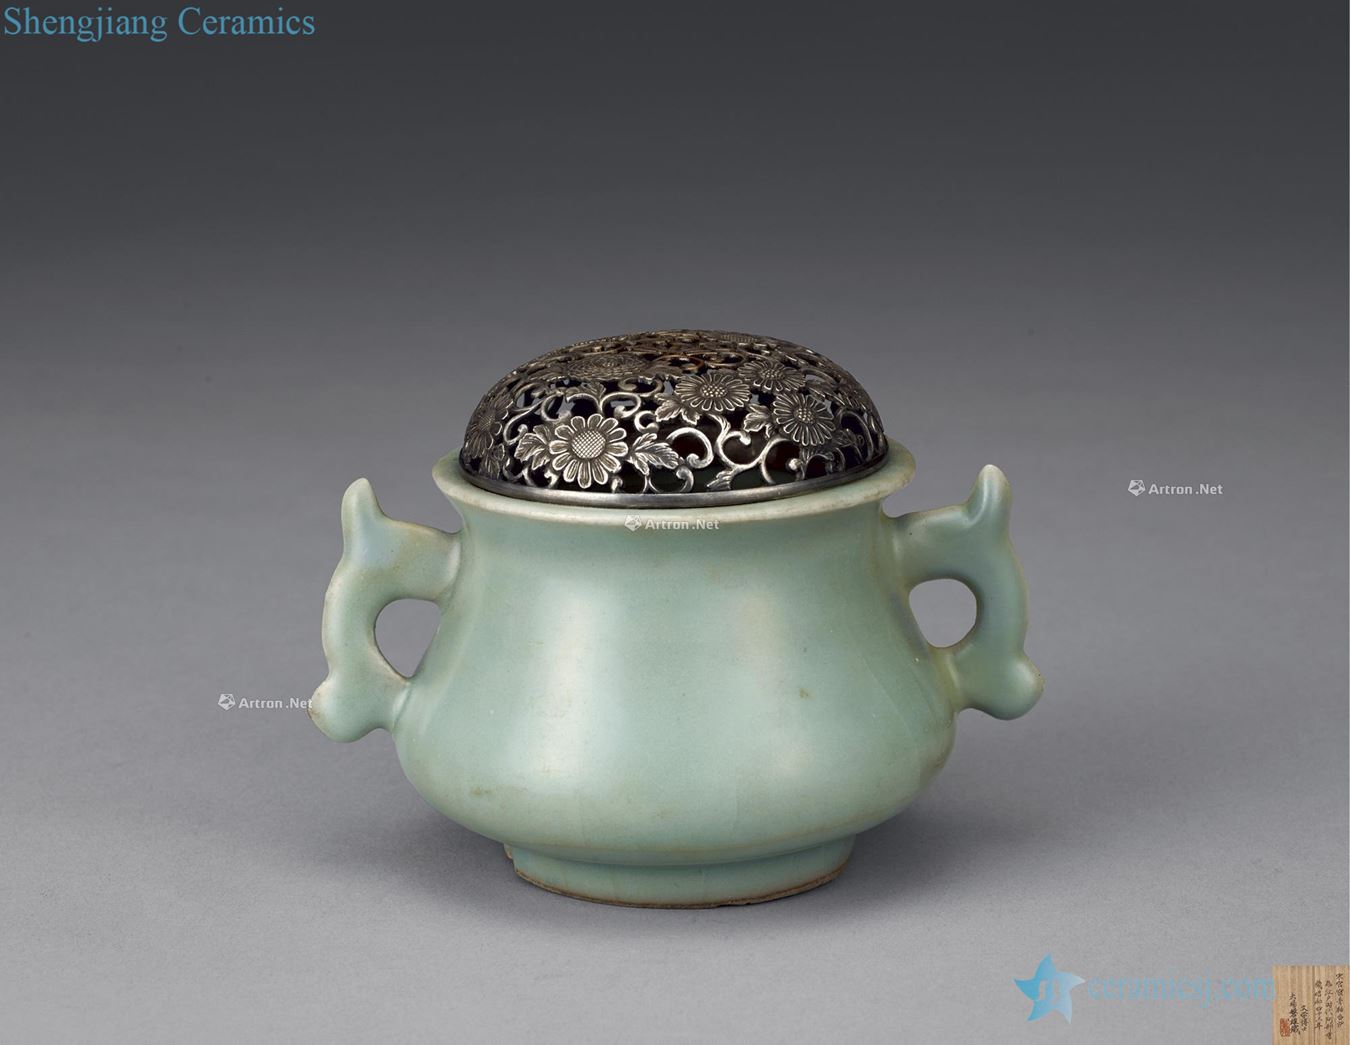 The song dynasty Longquan celadon celadon ears incense burner